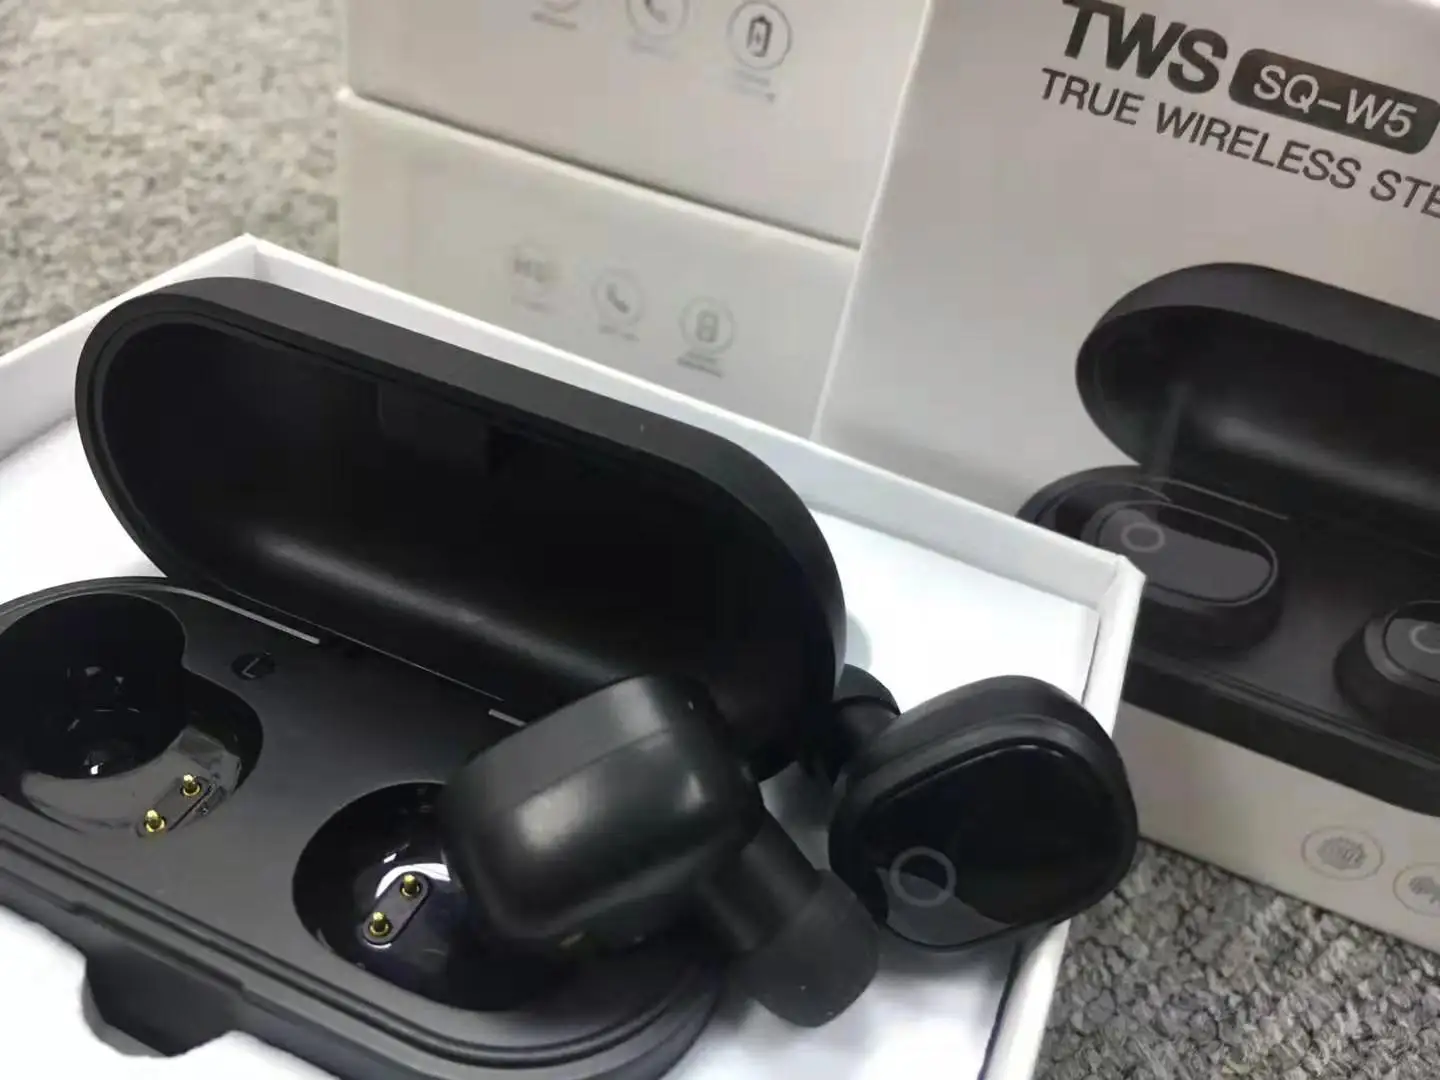 SQ-W5 TWS Fingerprint Touch Earphones, HD Stereo Wireless earphones,Noise Cancelling Gaming Headset